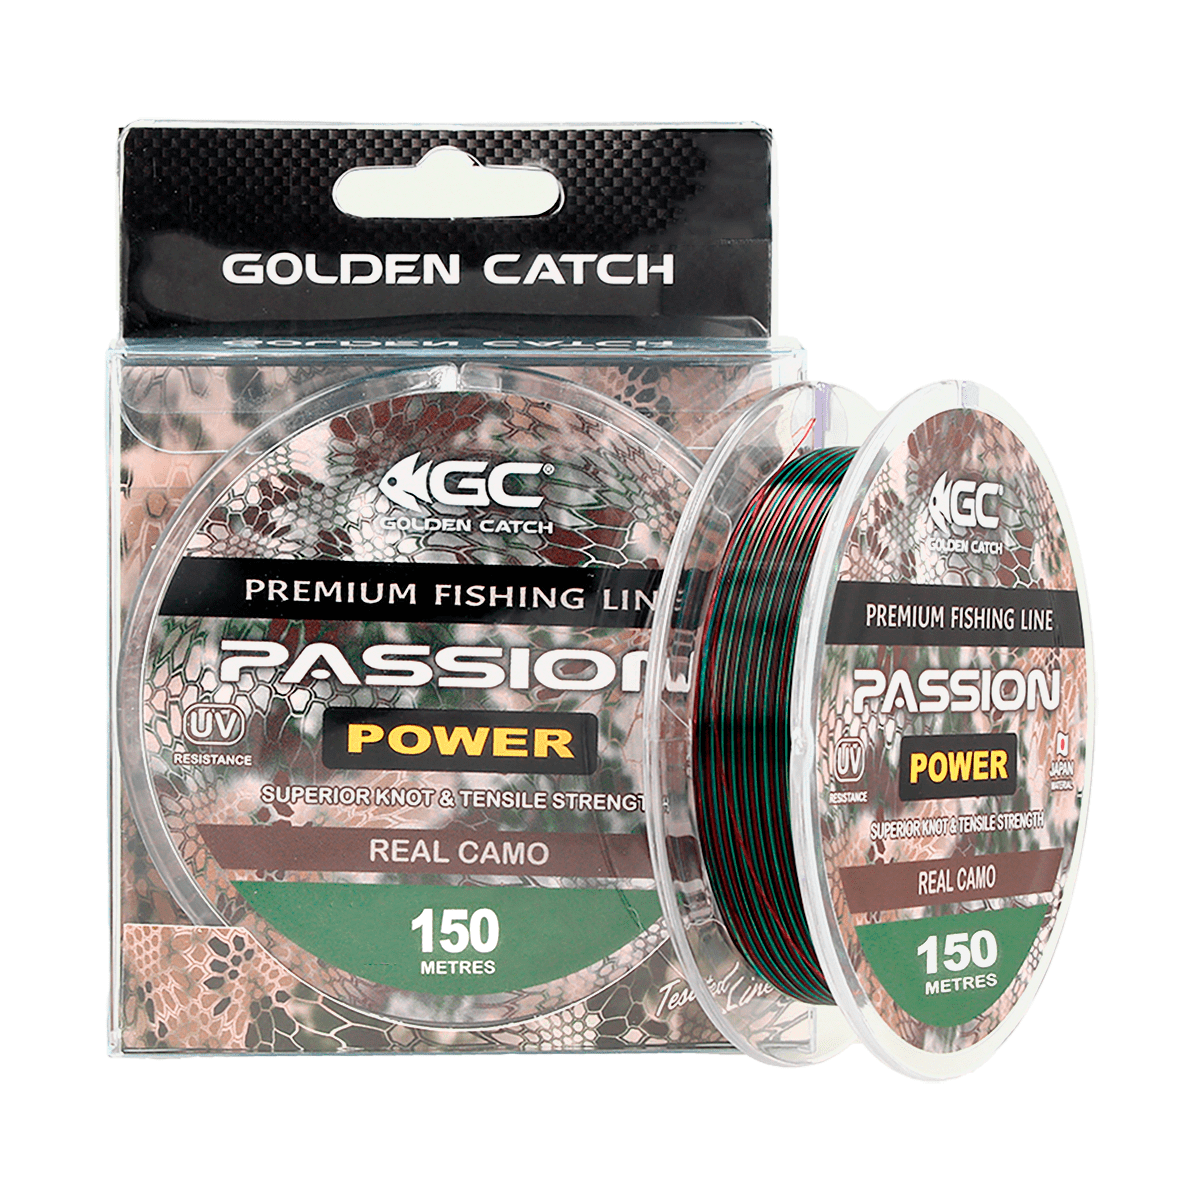 Golden Catch Nylon Line Passion Power 150m Real Camo